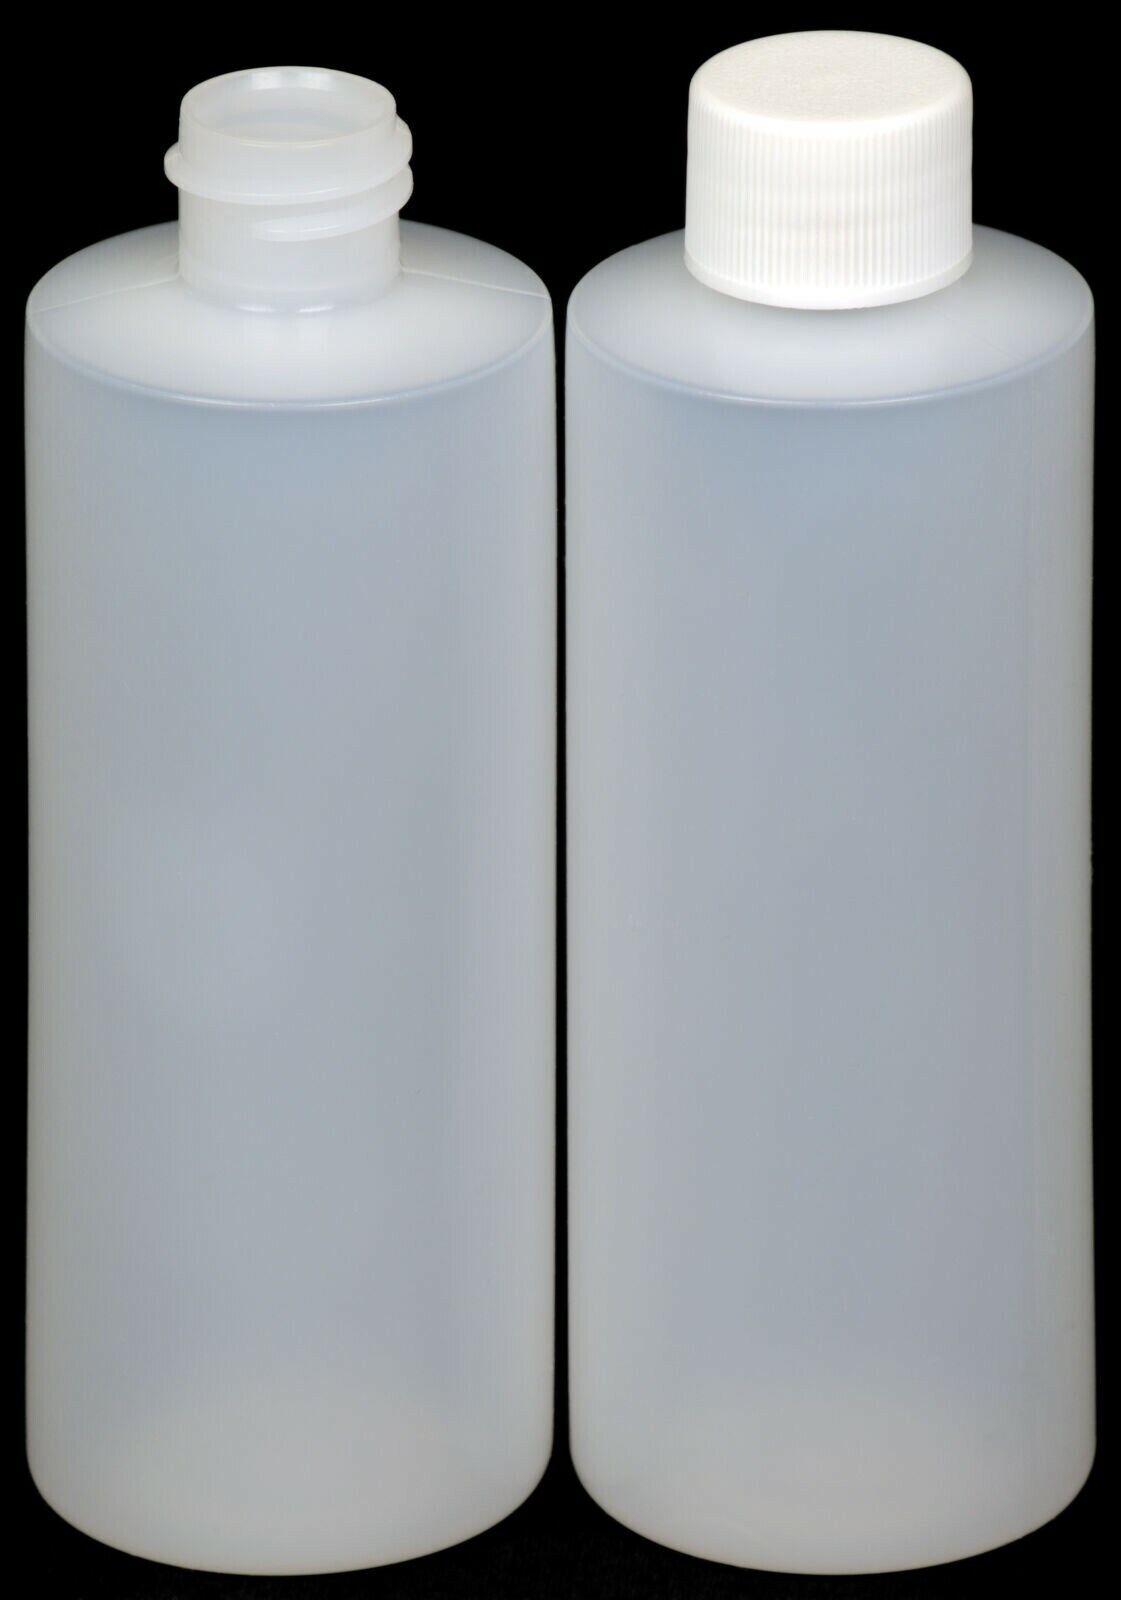 12 Pack Of 16oz Empty Plastic Hdpe Bottles W Caps For Homemade Sanitizer